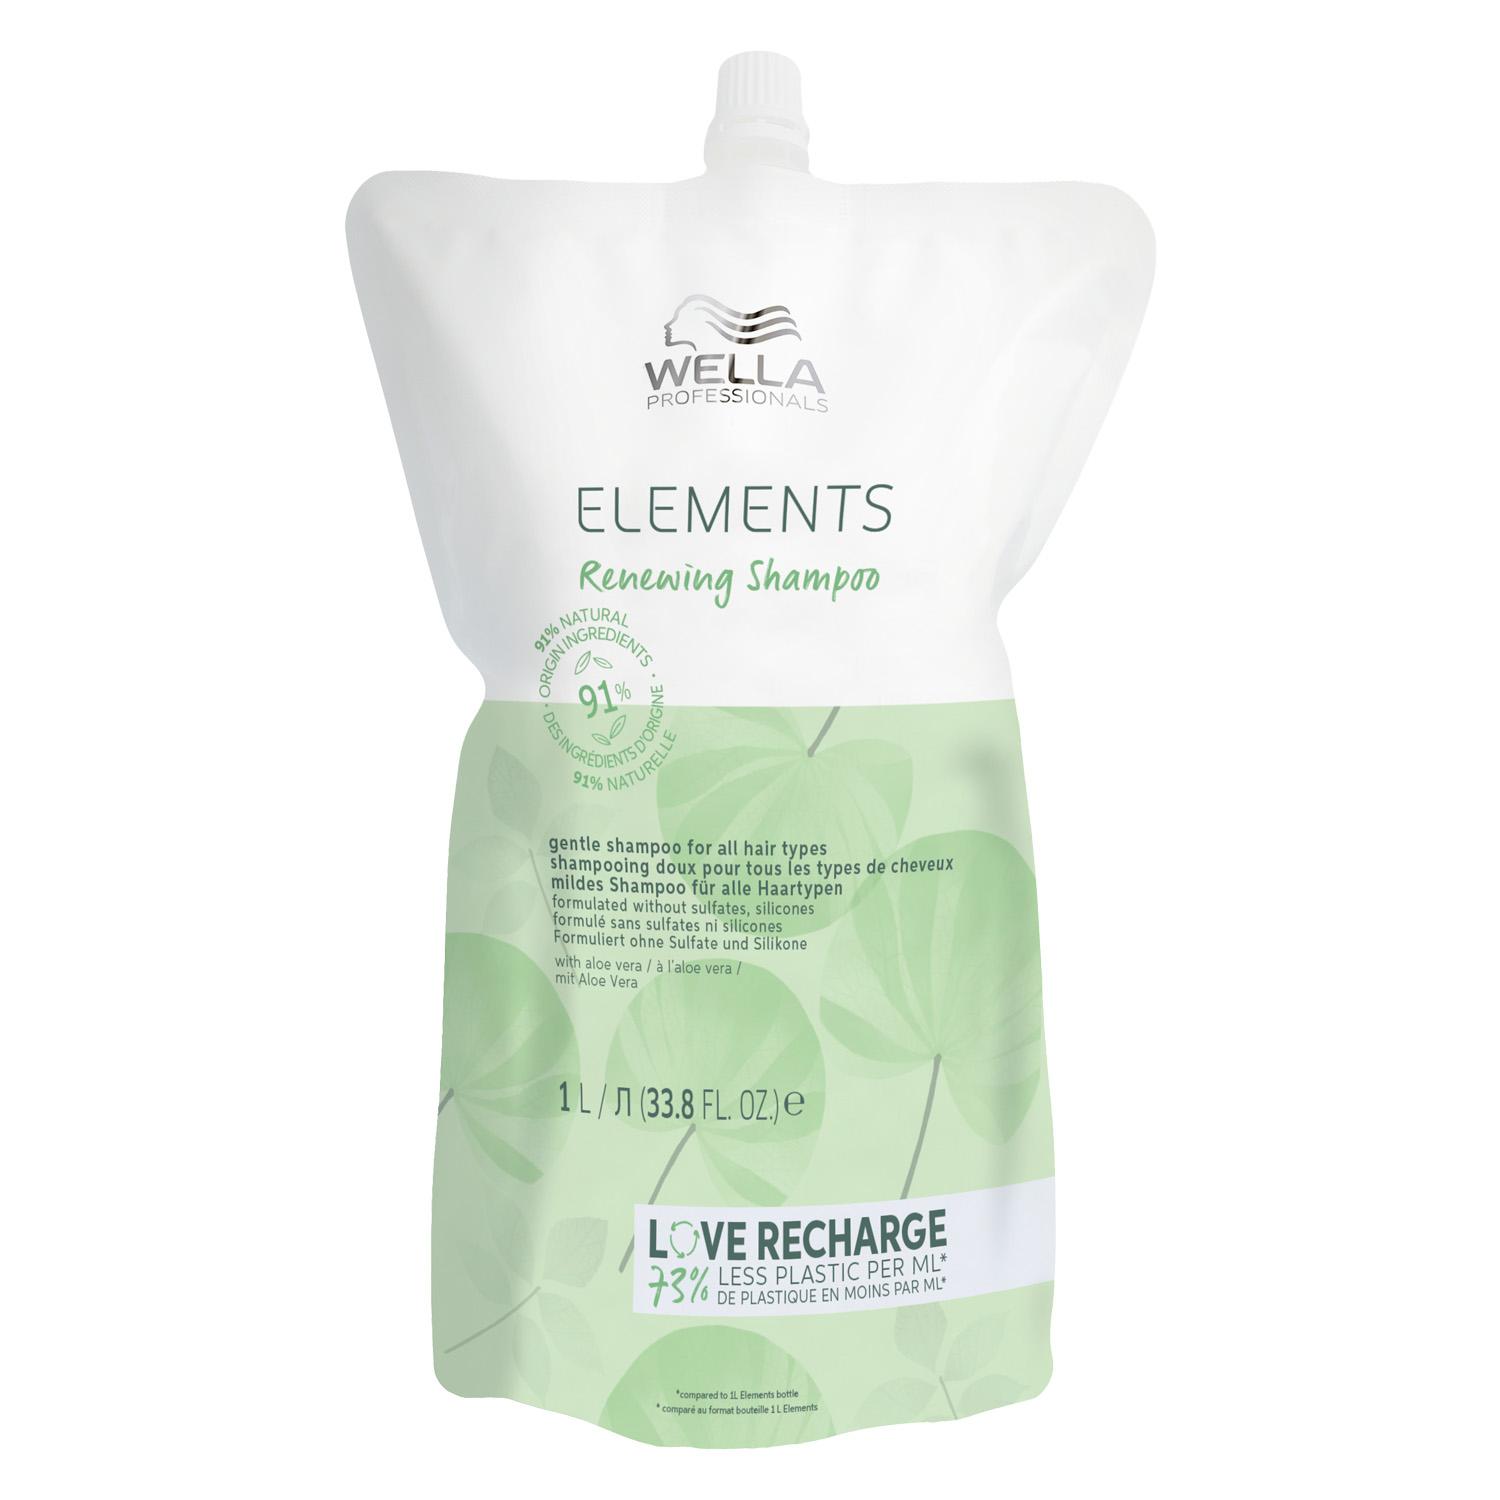 Elements - Renewing Shampoo Refill